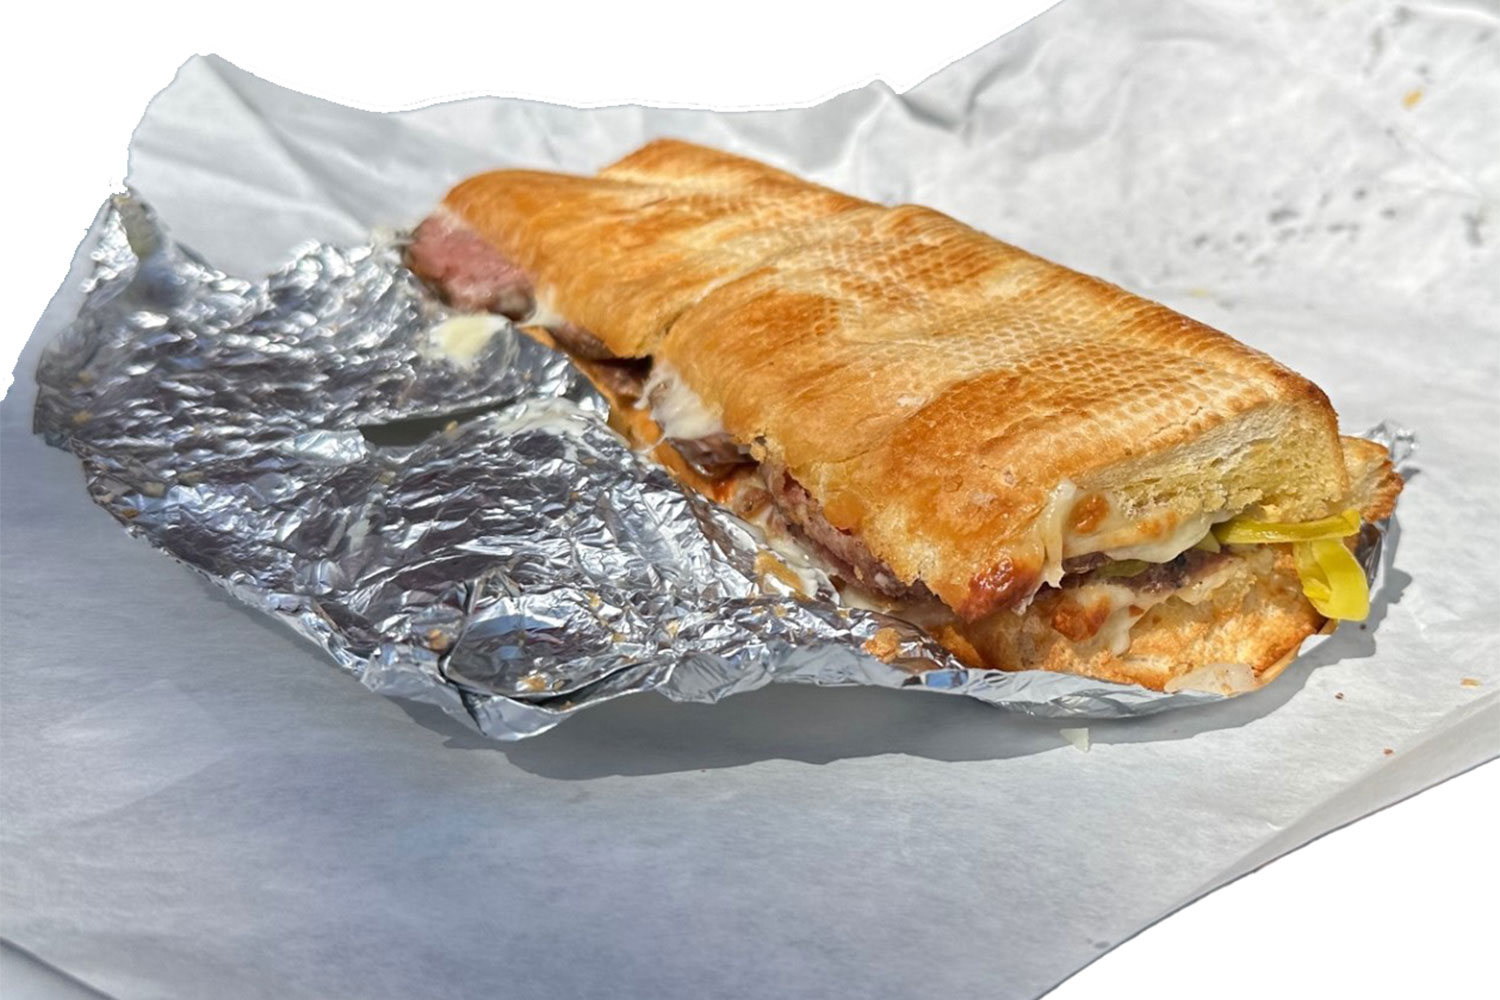 The Hot Salami sandwich from Gioias Deli